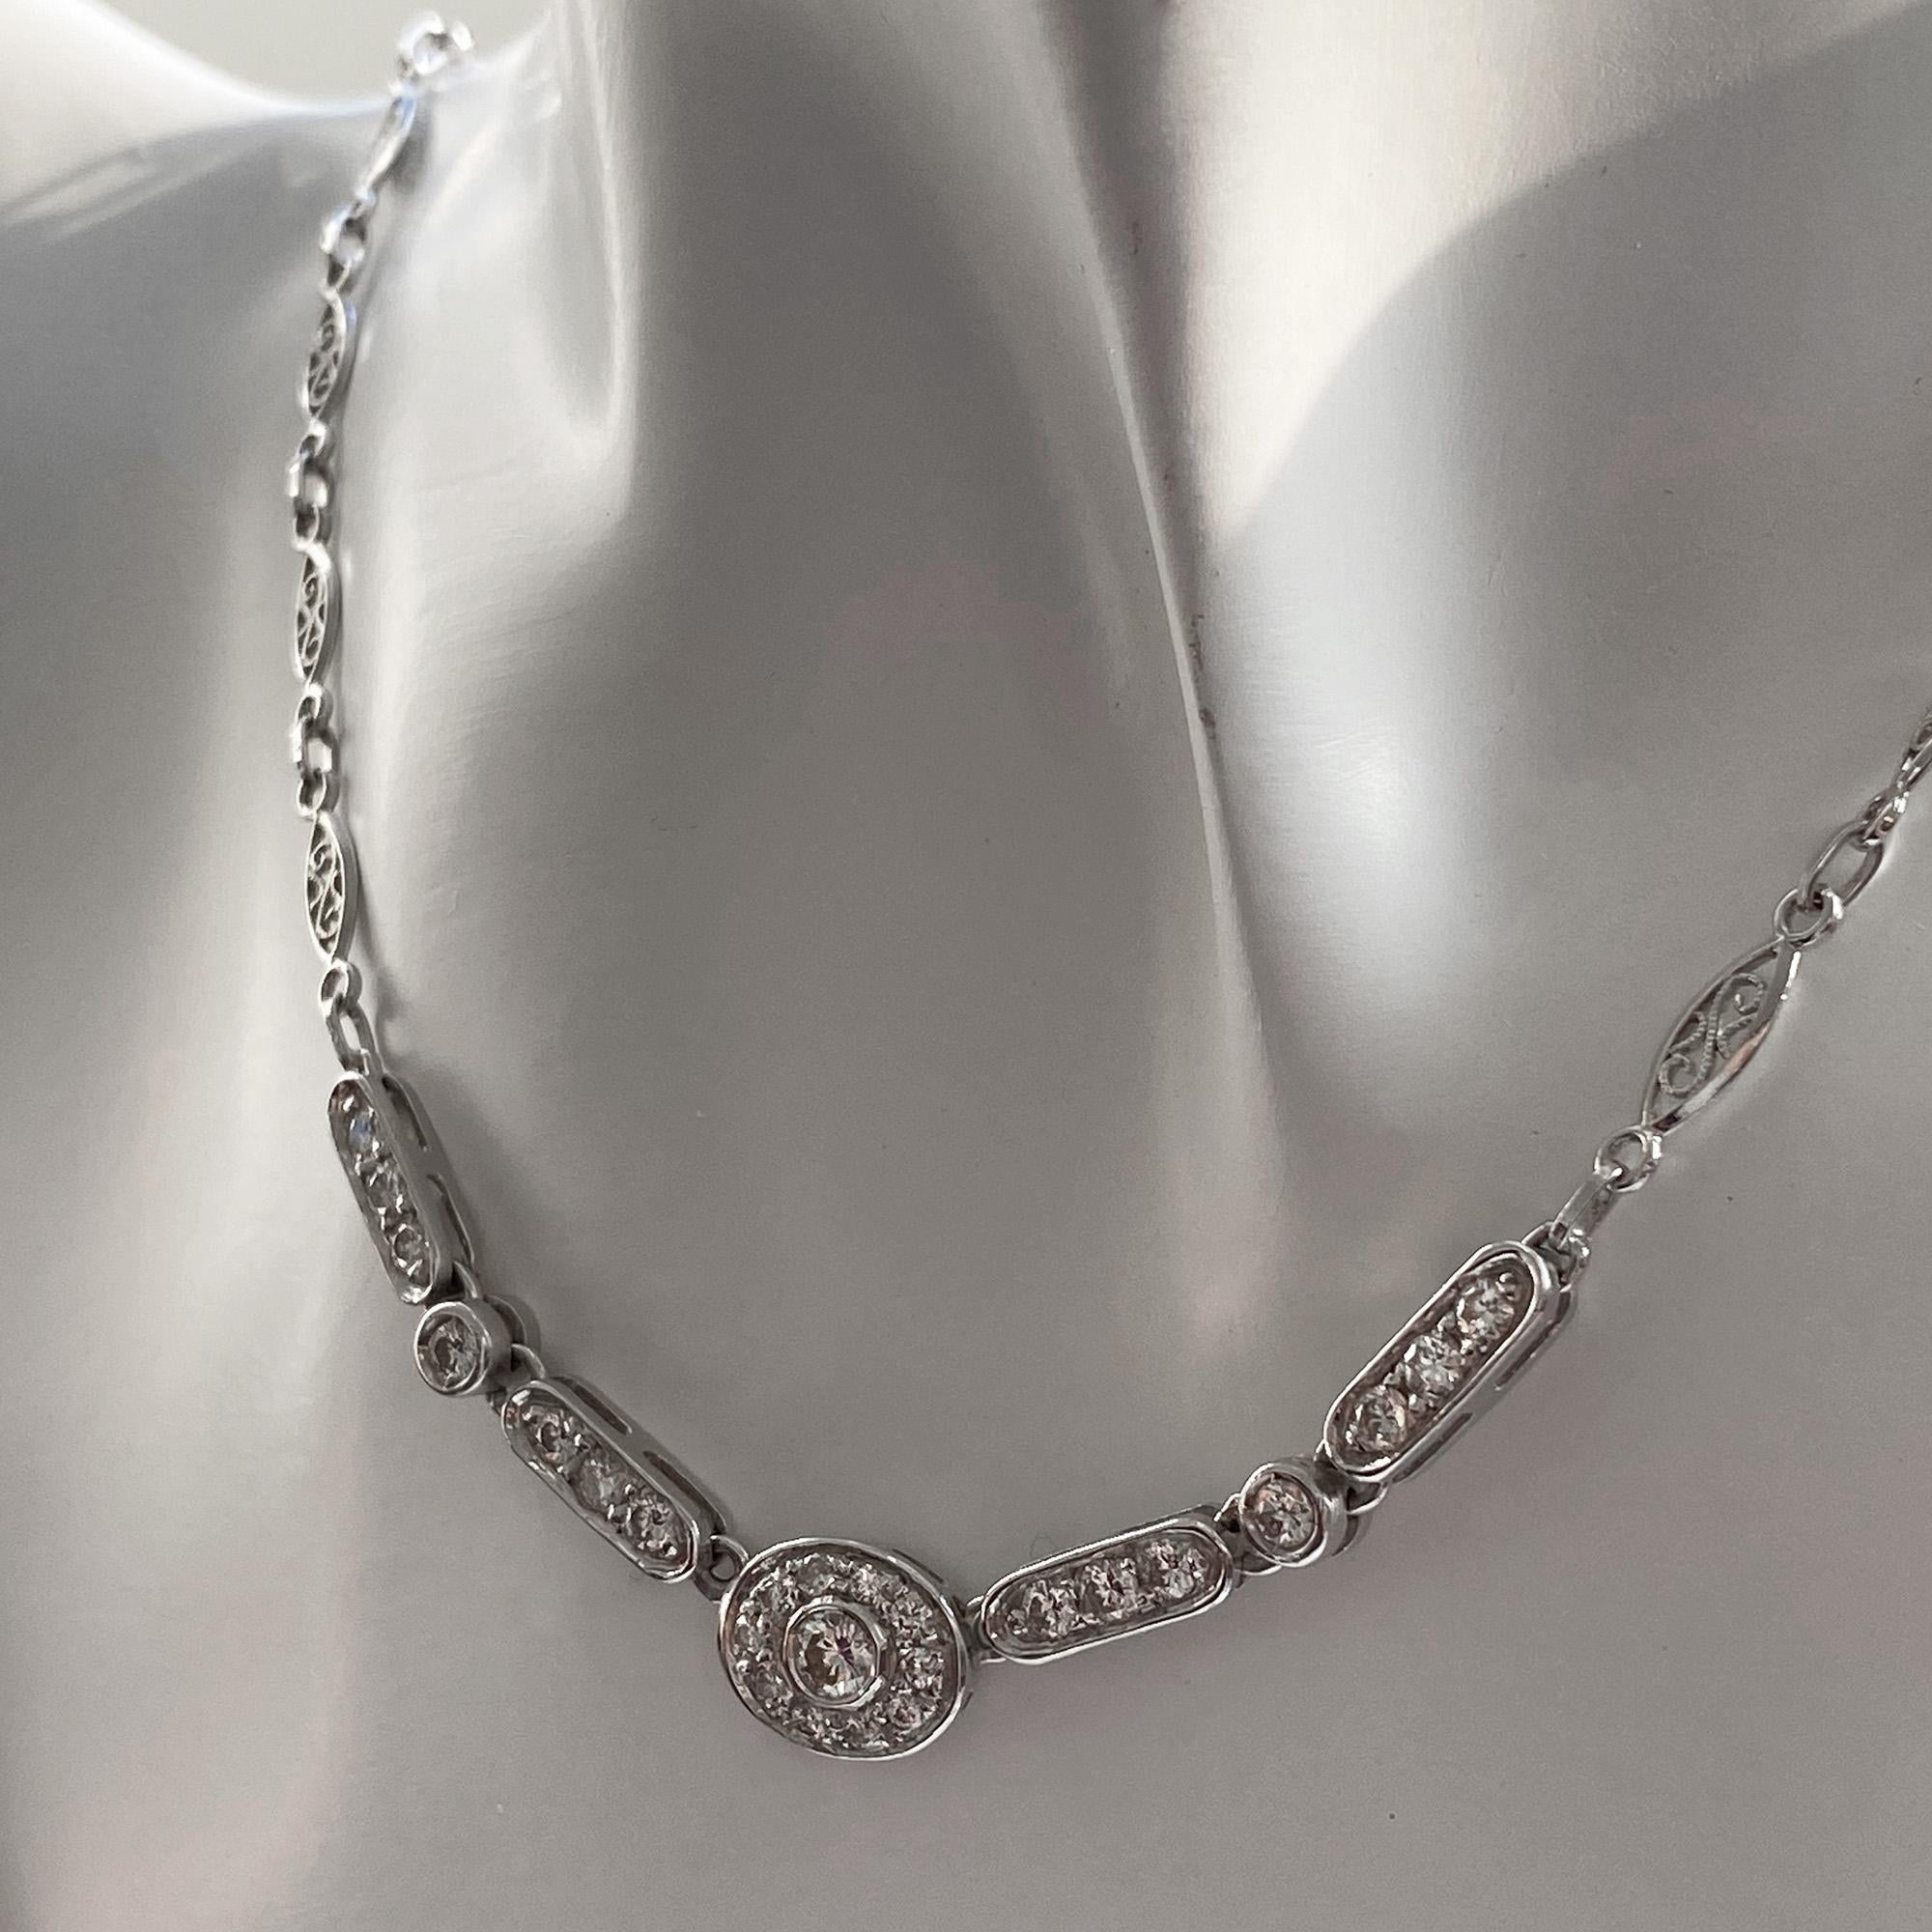 Vintage Necklace 
Total Weight : 10,75gr (18 kt white gold)
Natural Diamonds : 25pcs - estimated 1,41ct total
Size : 45cm